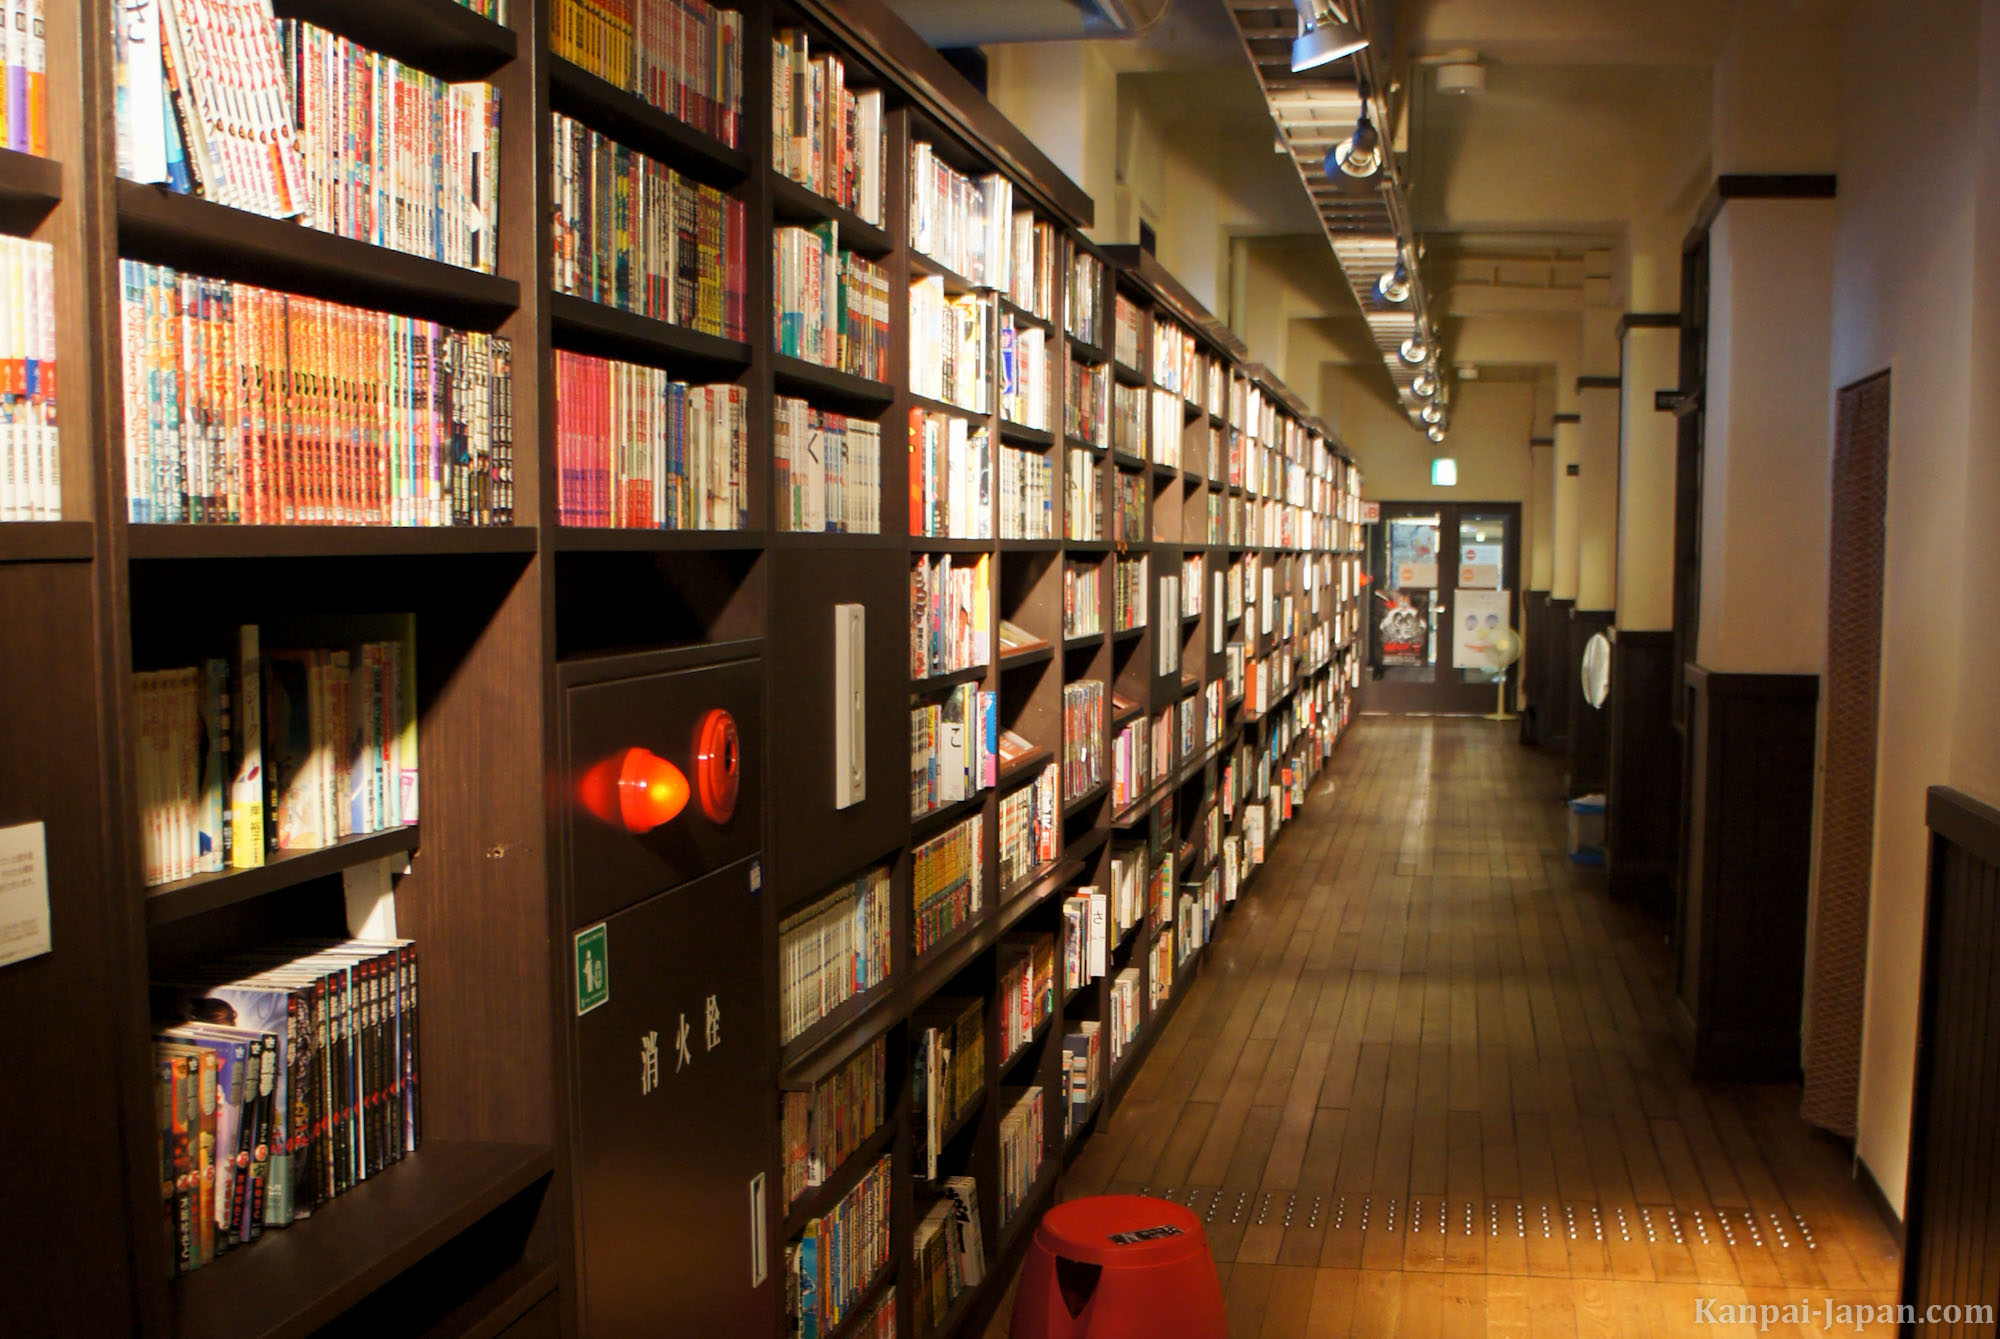 International Manga Museum - The 300,000 Japanese comics library